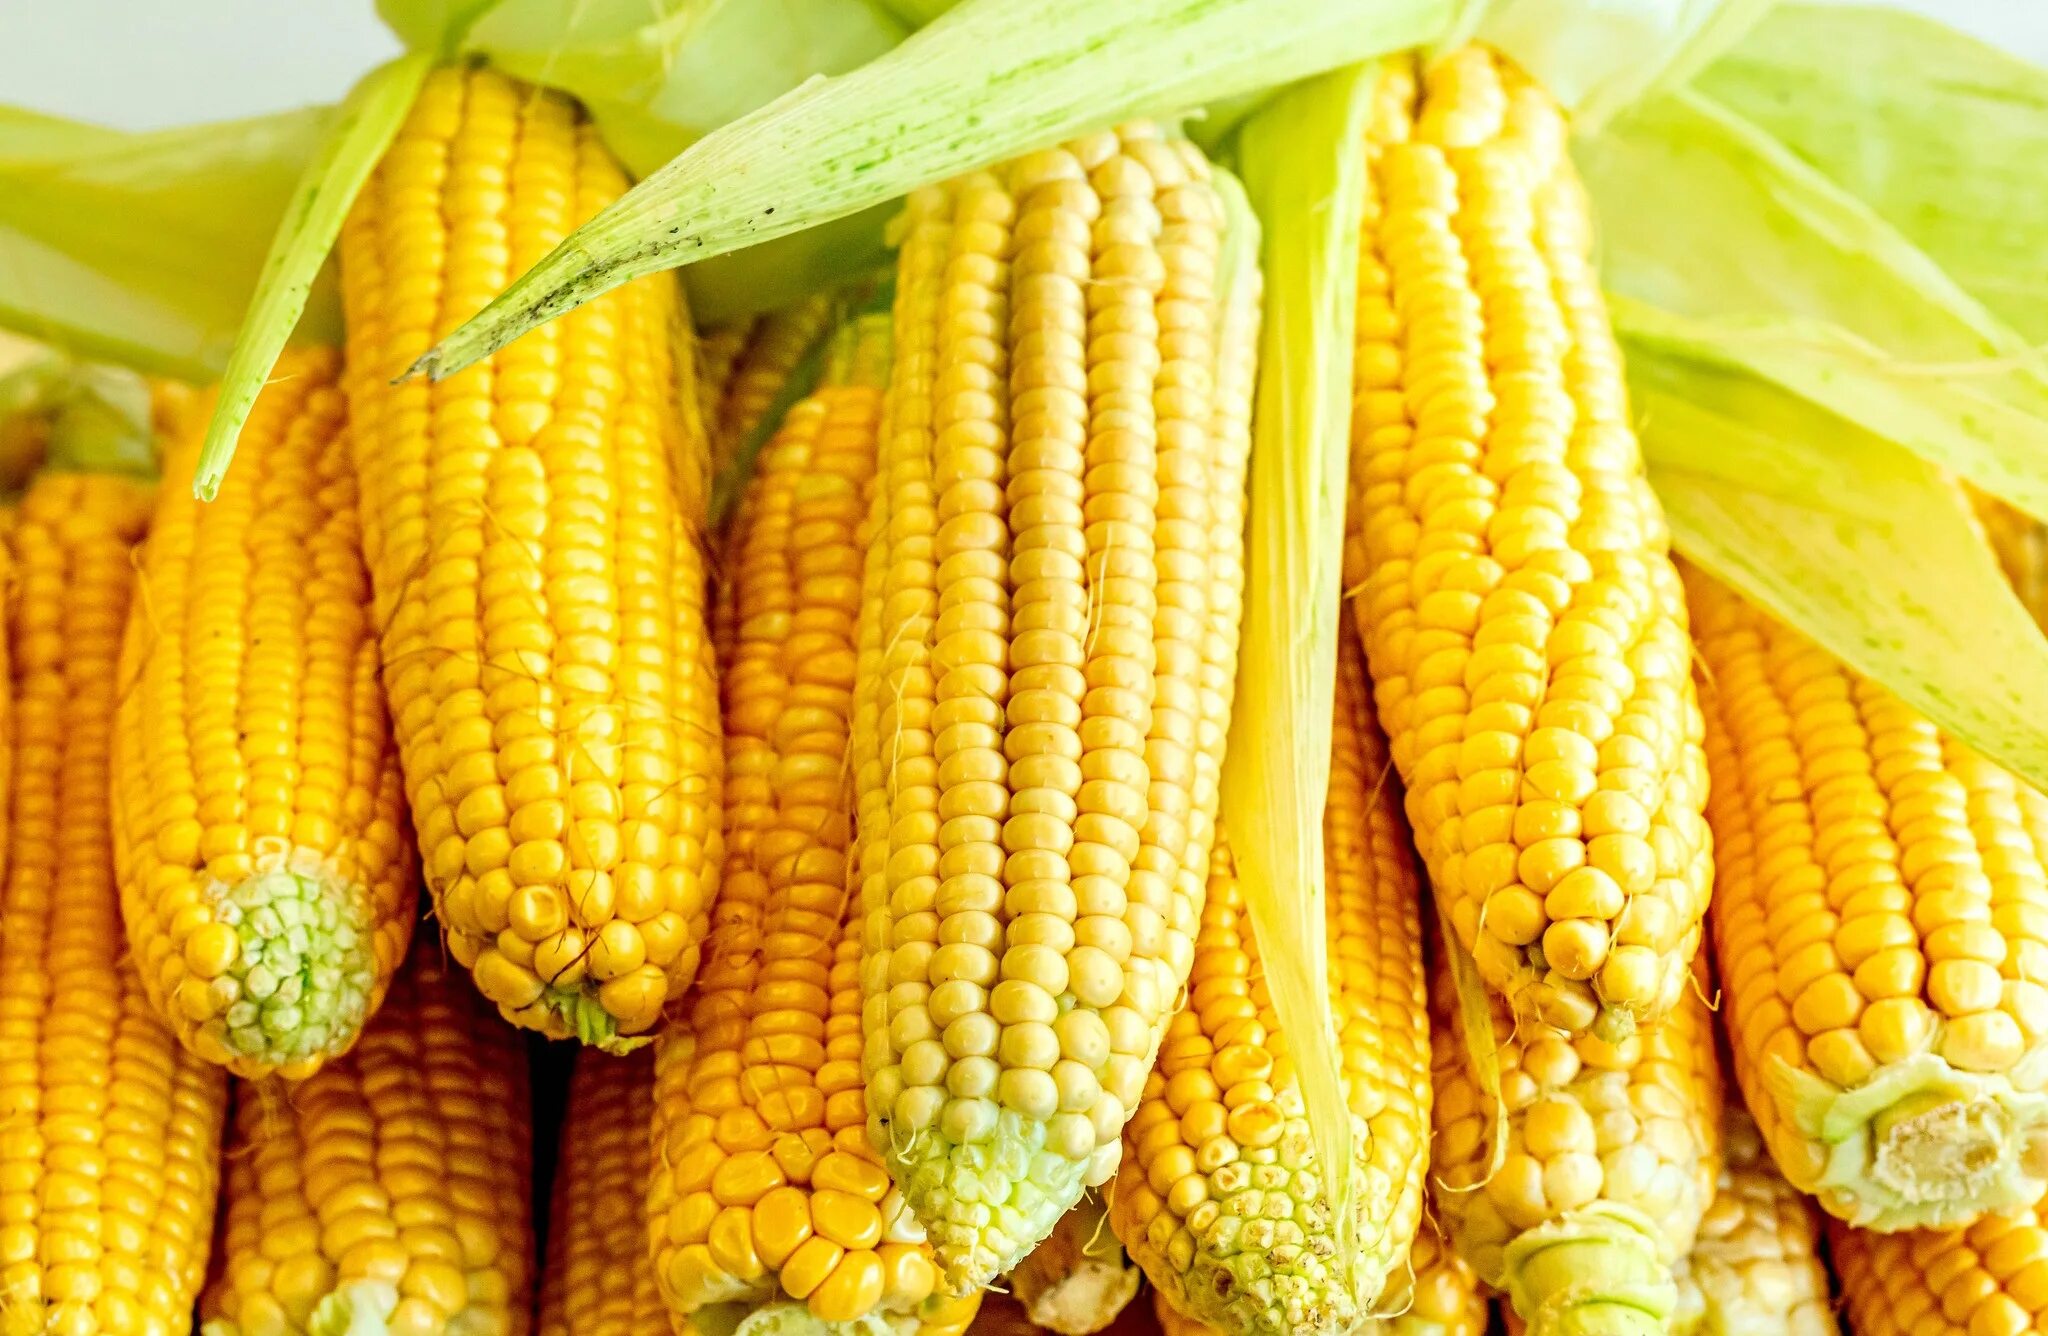 Mays corn. Кукуруза дроблёная. Кукуруза початок. Кукуруза в початках кормовая. Китайская кукуруза.